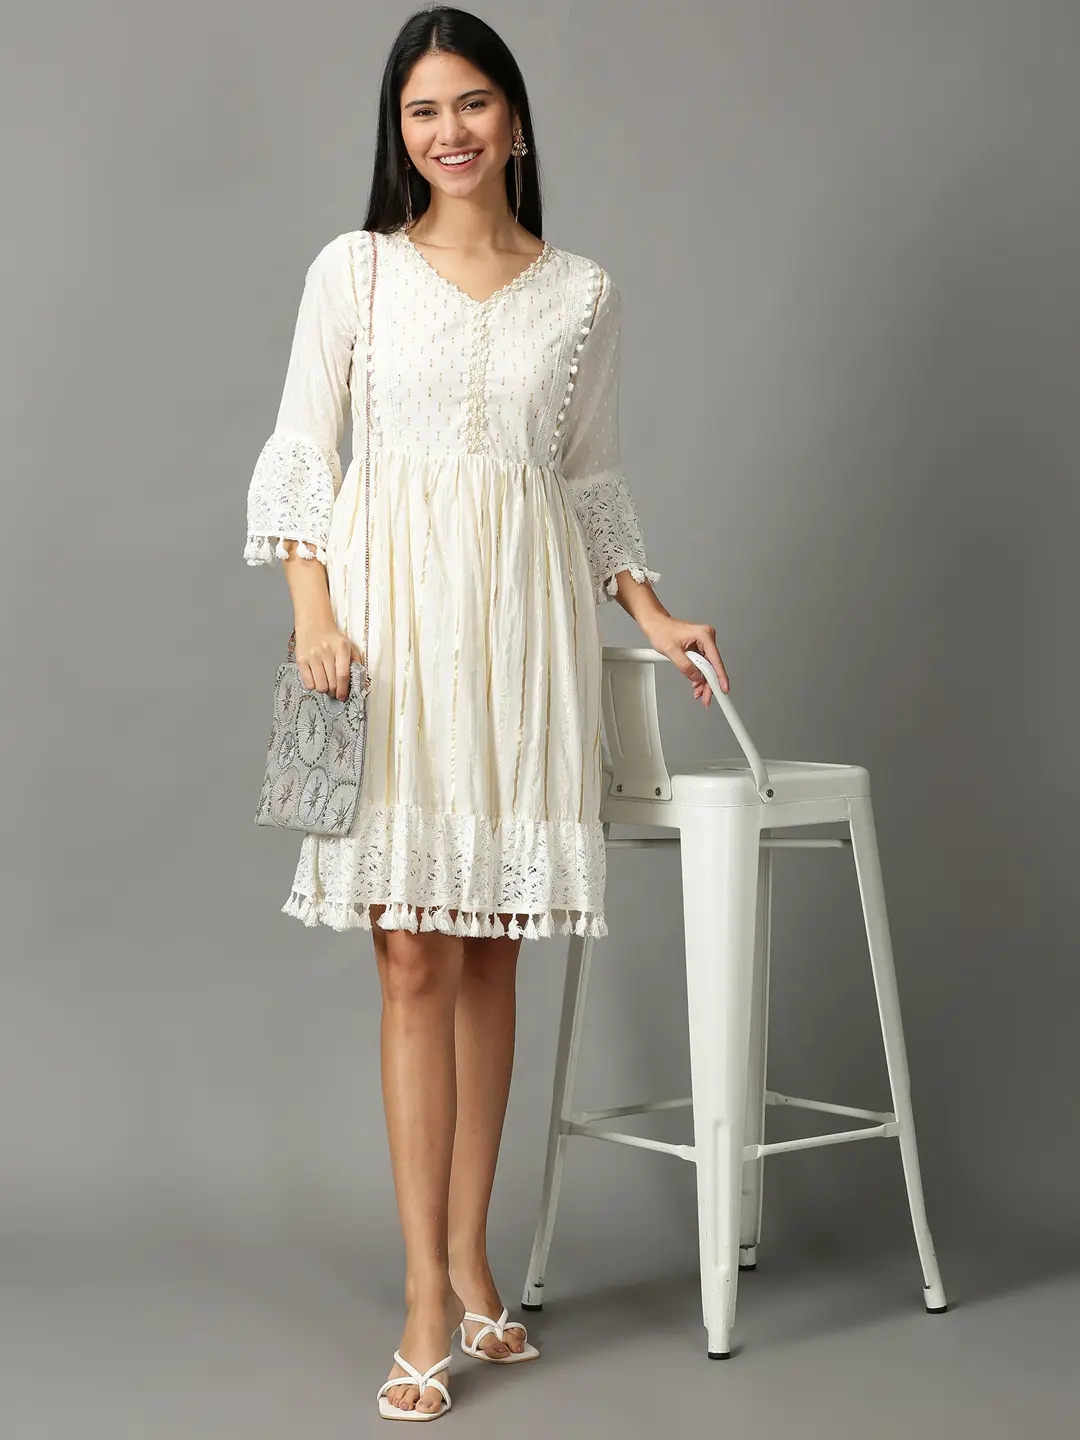 white off the shoulder knee length dress